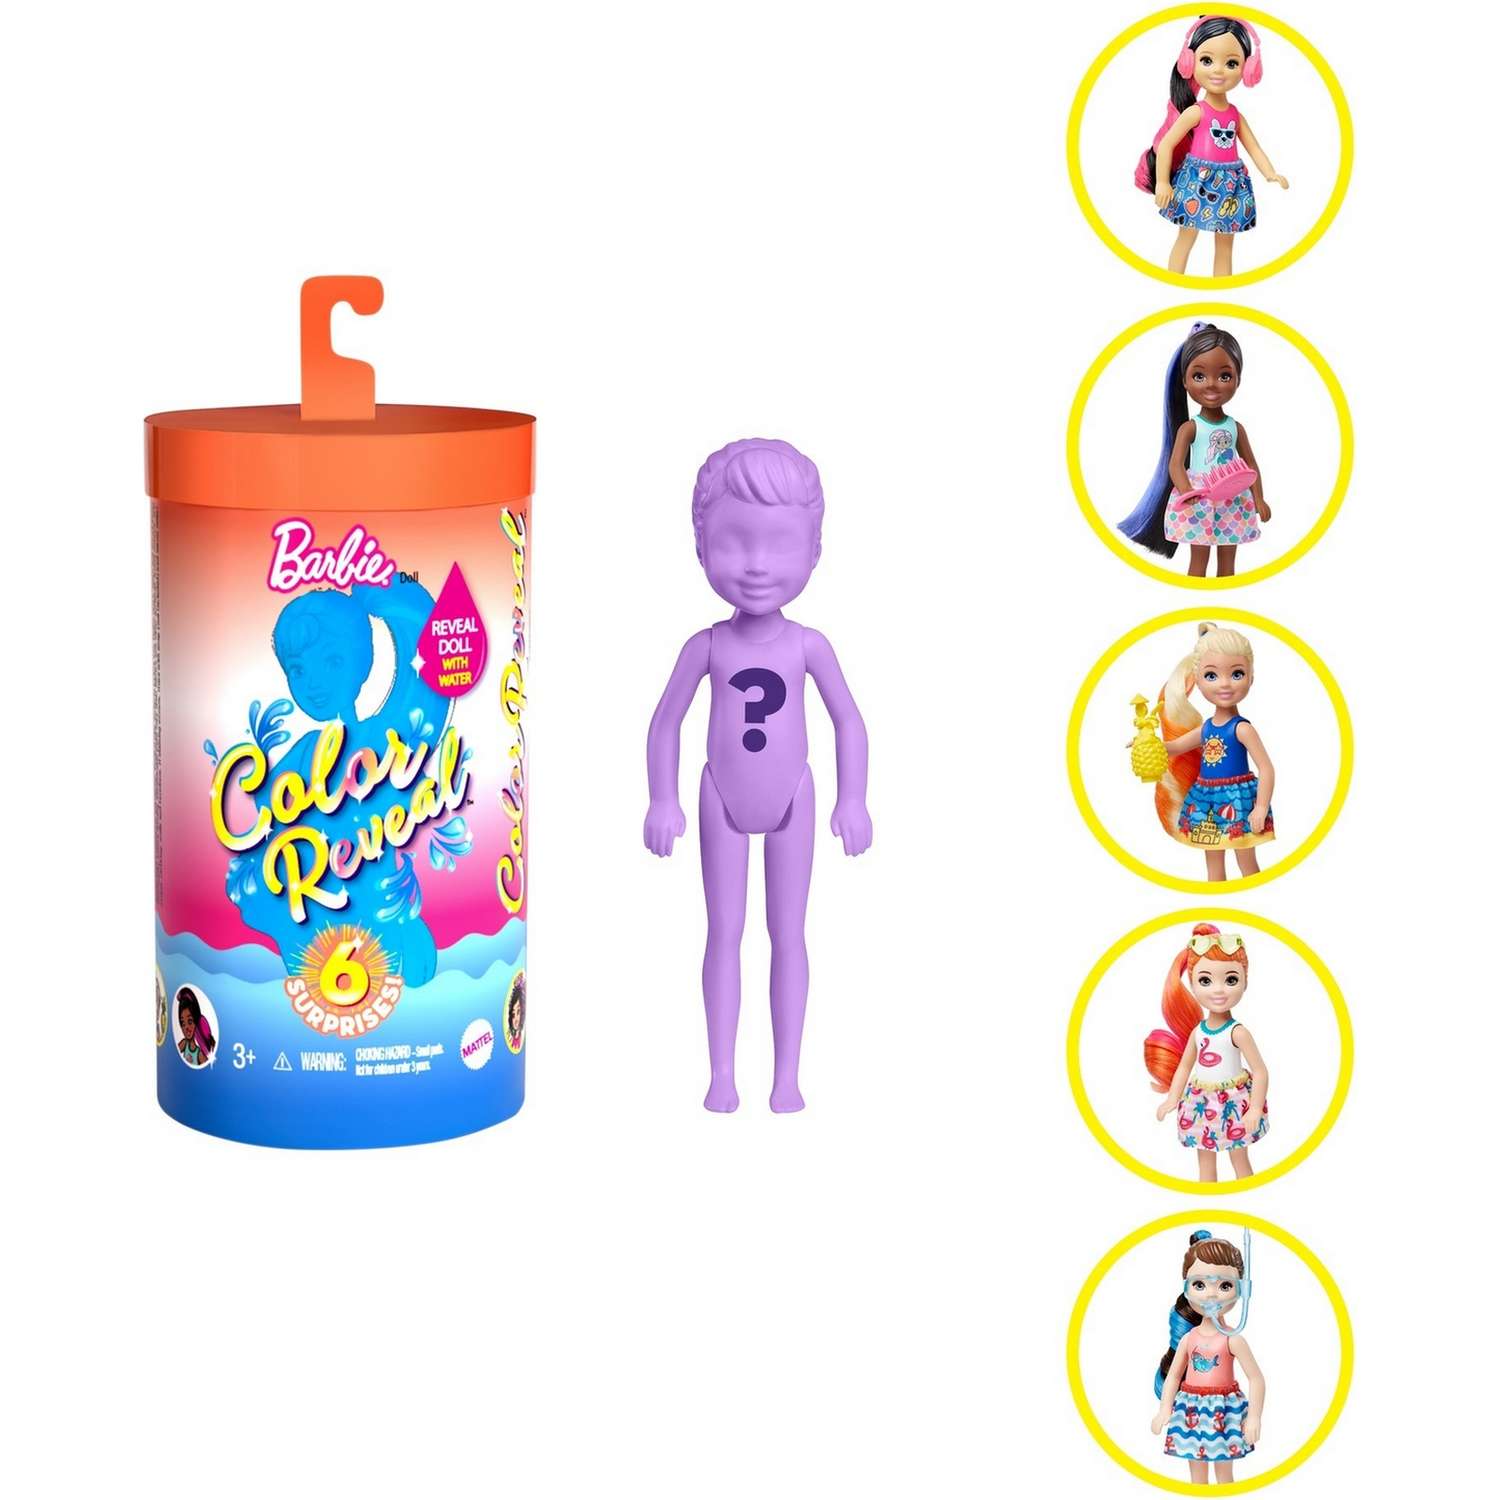 Кукла Barbie Челси волна 2 в непрозрачной упаковке (Сюрприз) GTP52 GTP52 - фото 8